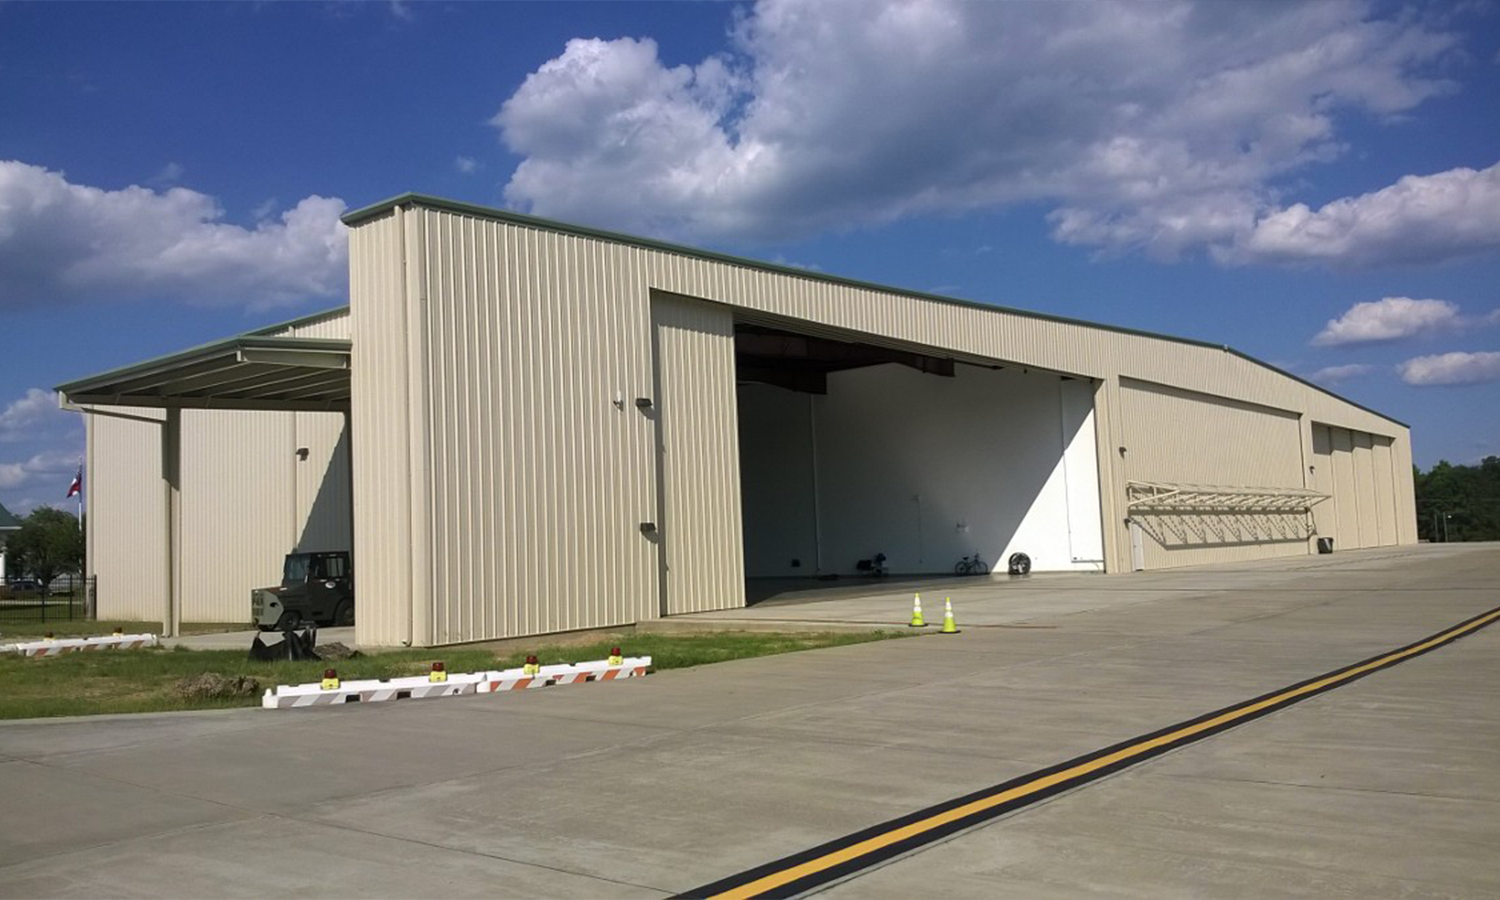 Outside View of Hangar